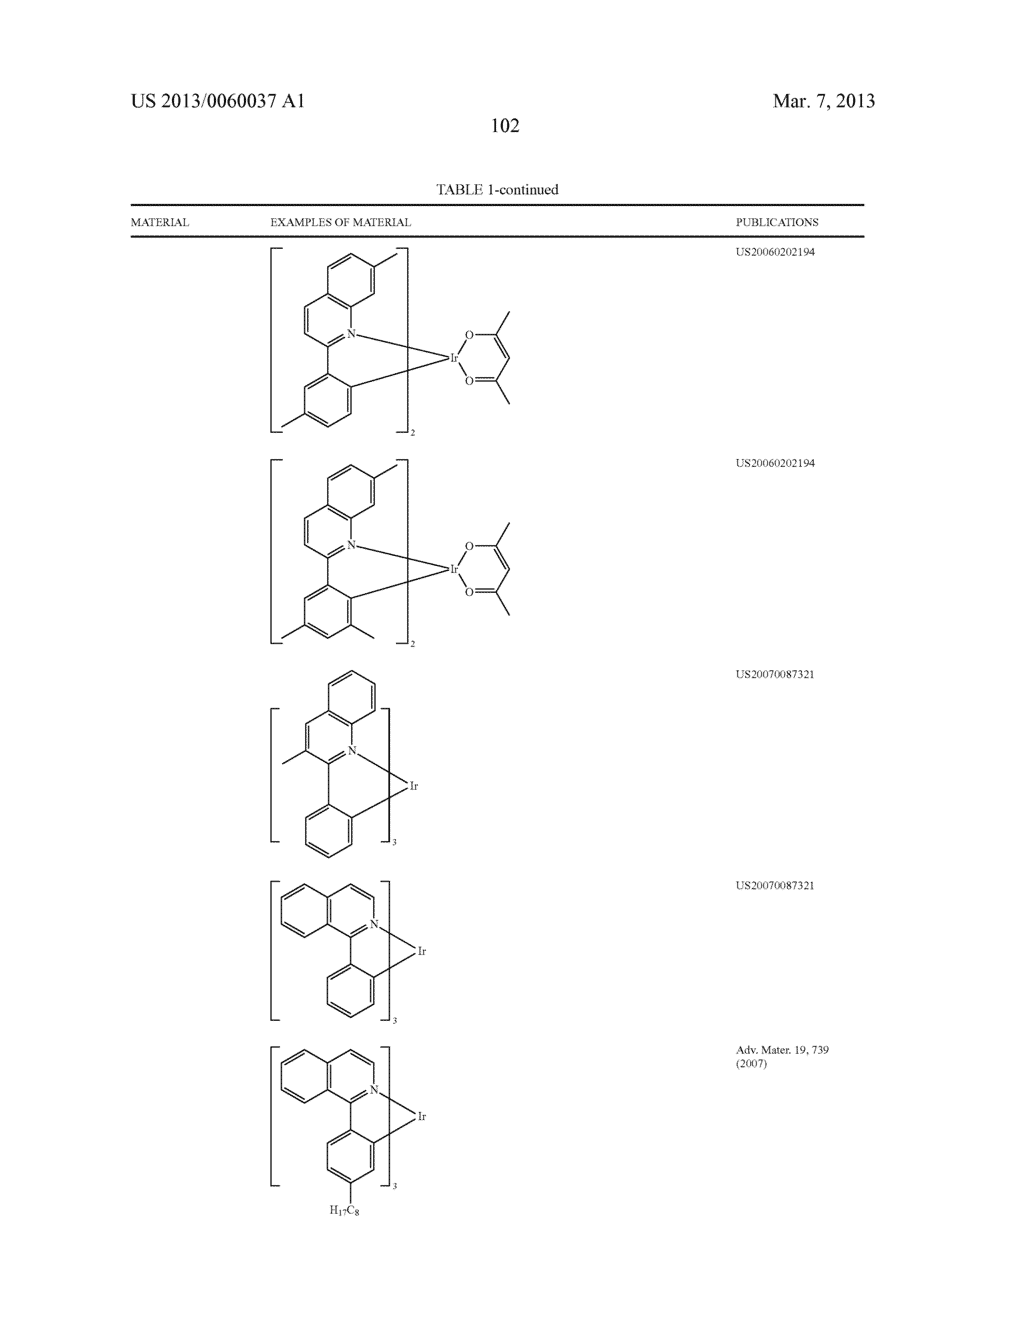 MATERIALS WITH AZA-DIBENZOTHIOPHENE OR AZA-DIBENZOFURAN CORE FOR PHOLED - diagram, schematic, and image 107